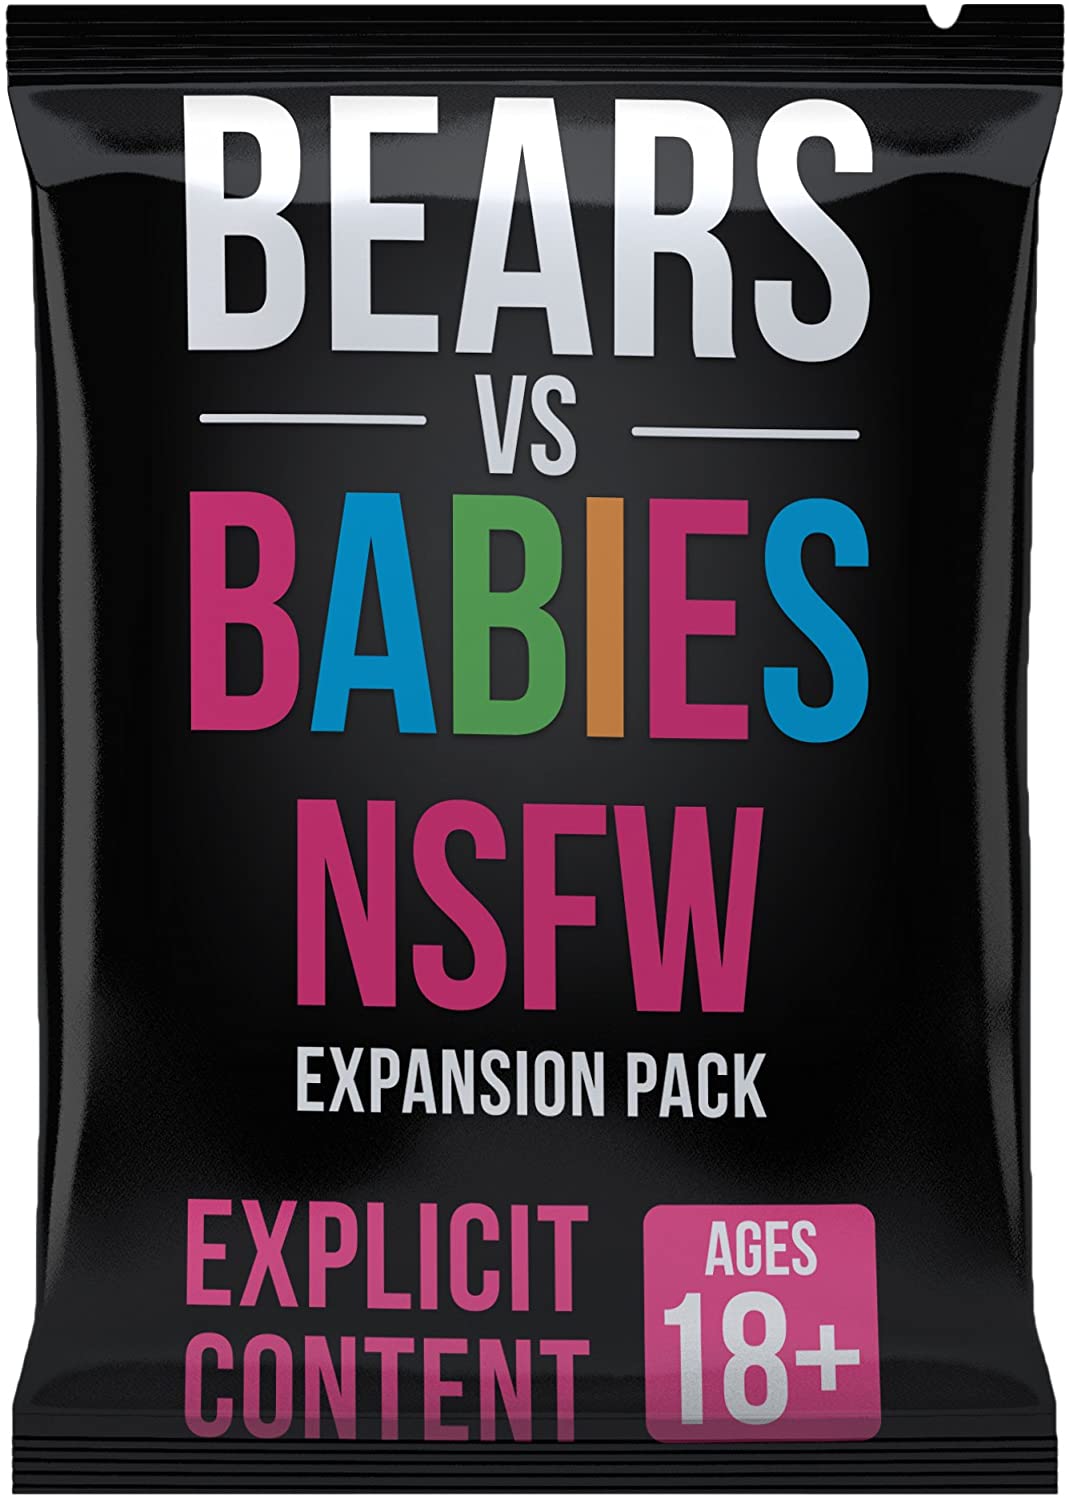 Bears vs Babies - NSFW